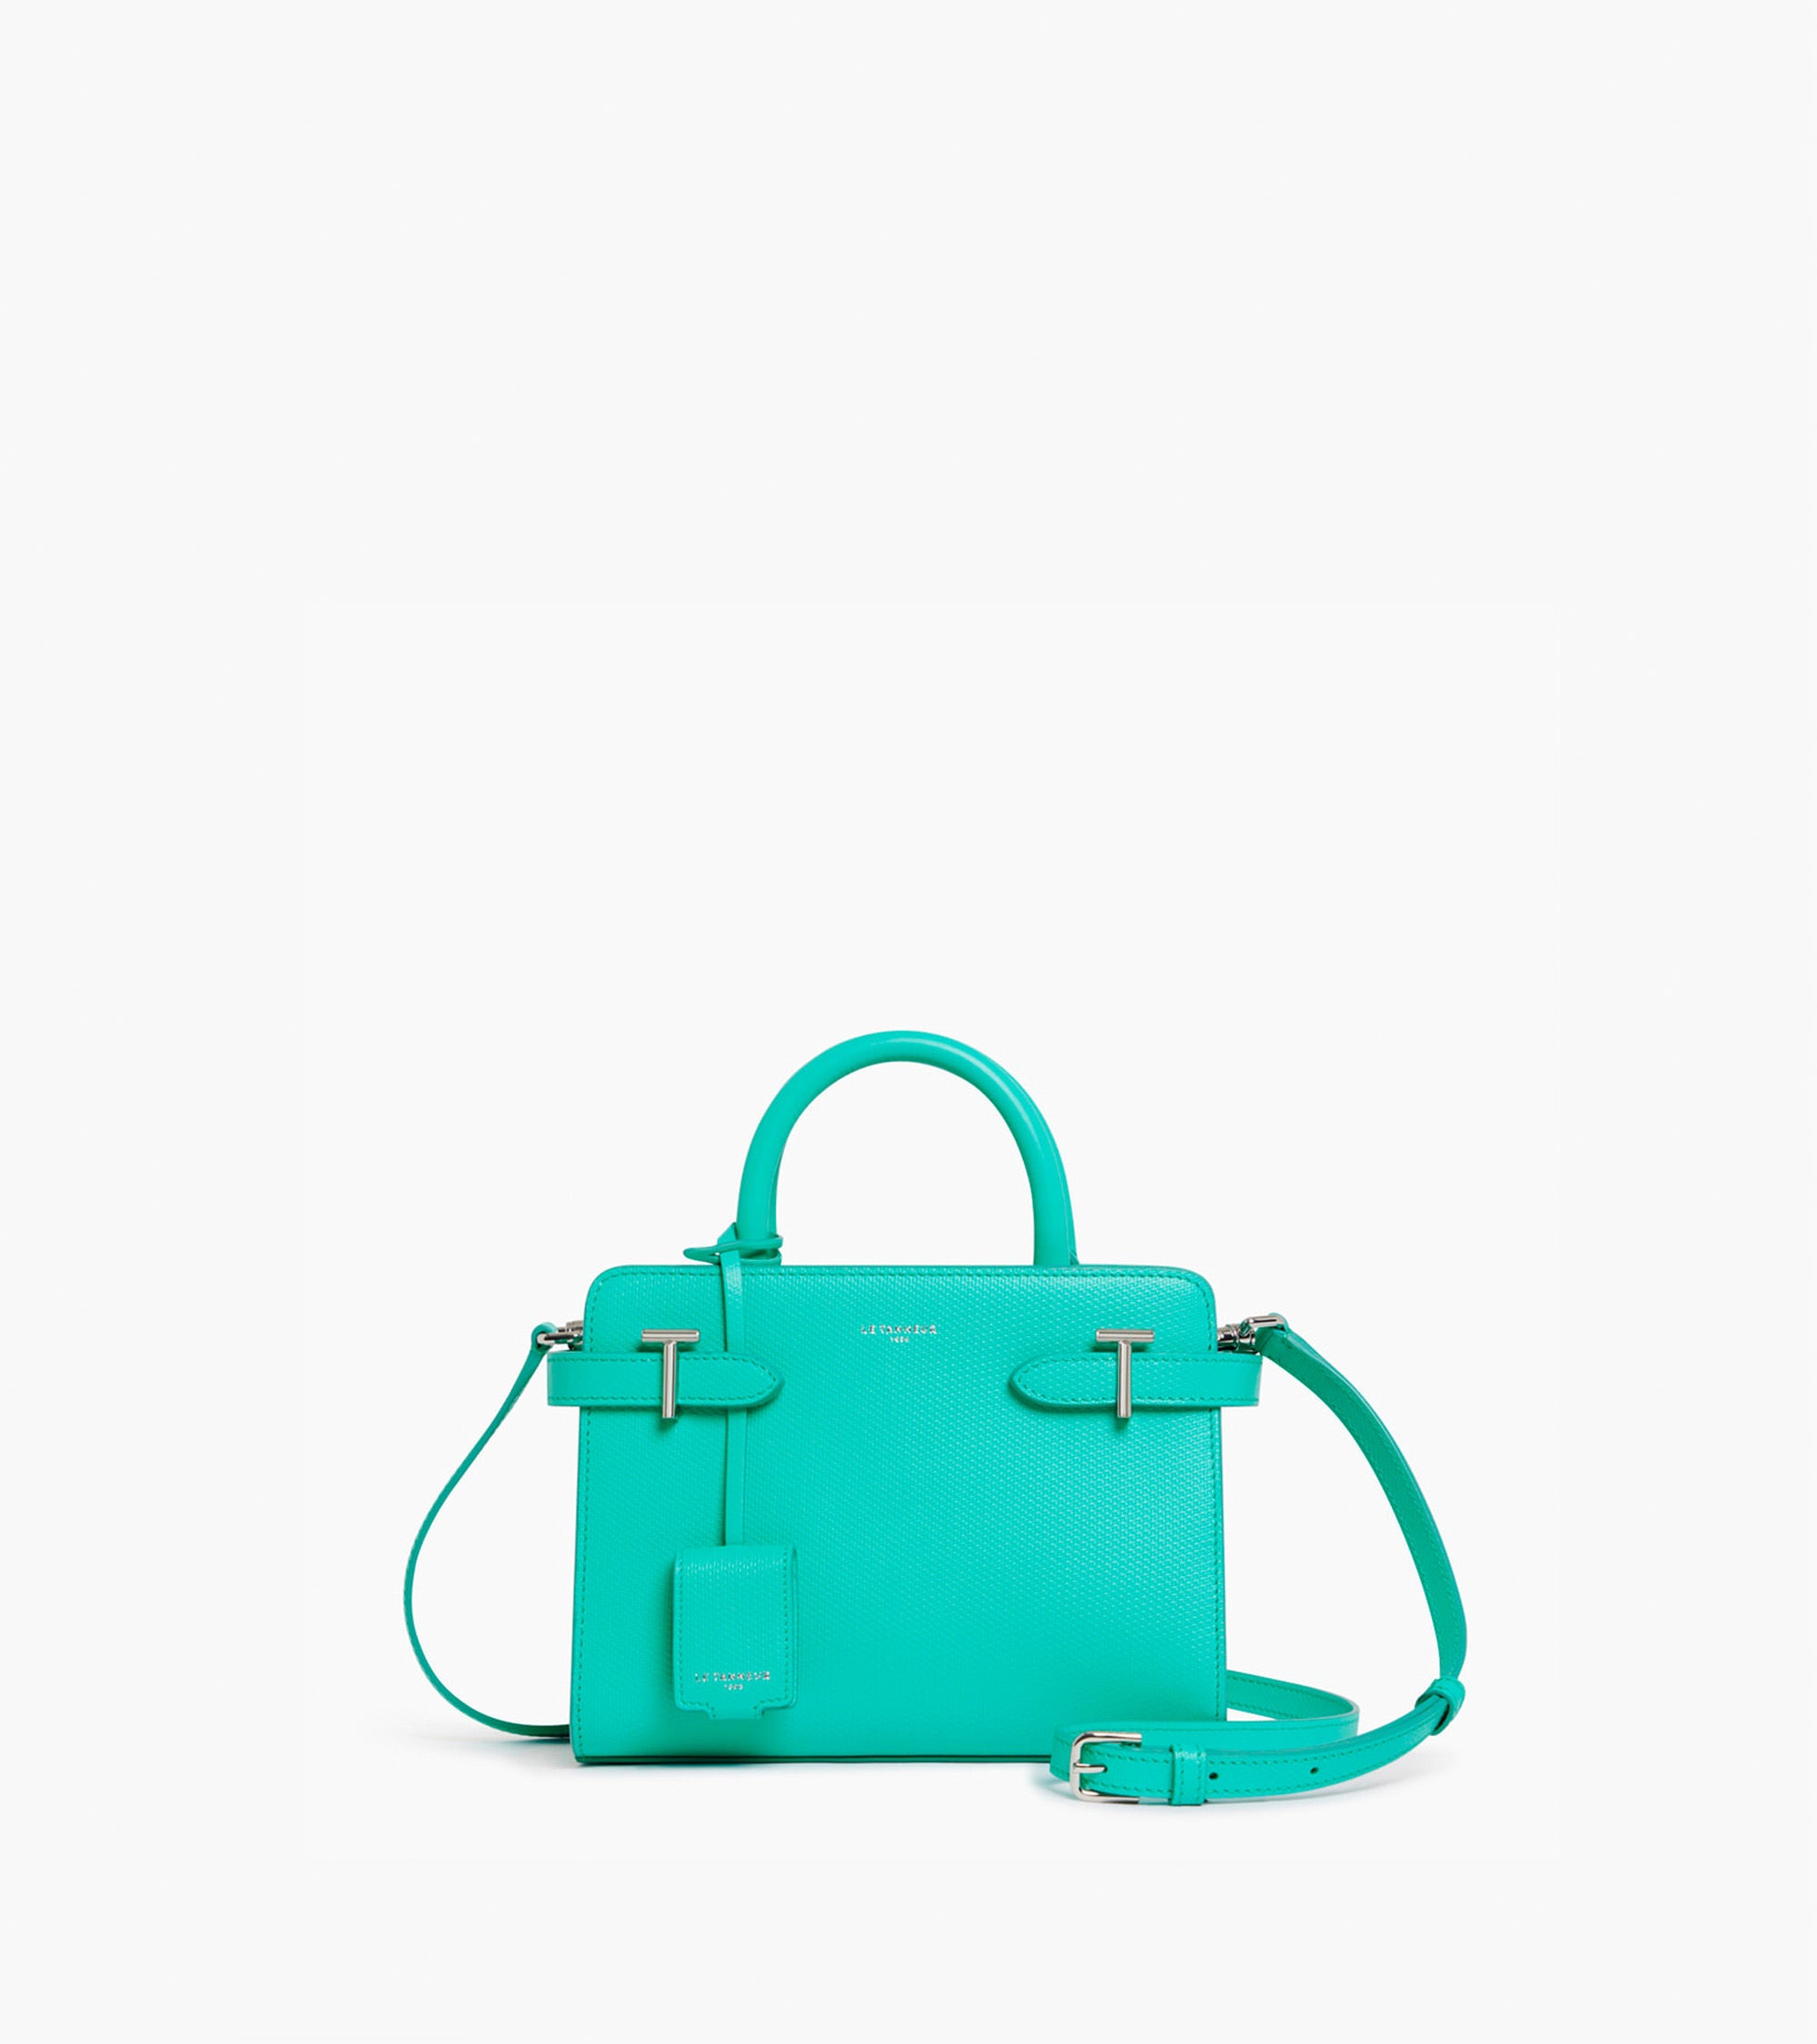 Emilie small handbag in T signature leather